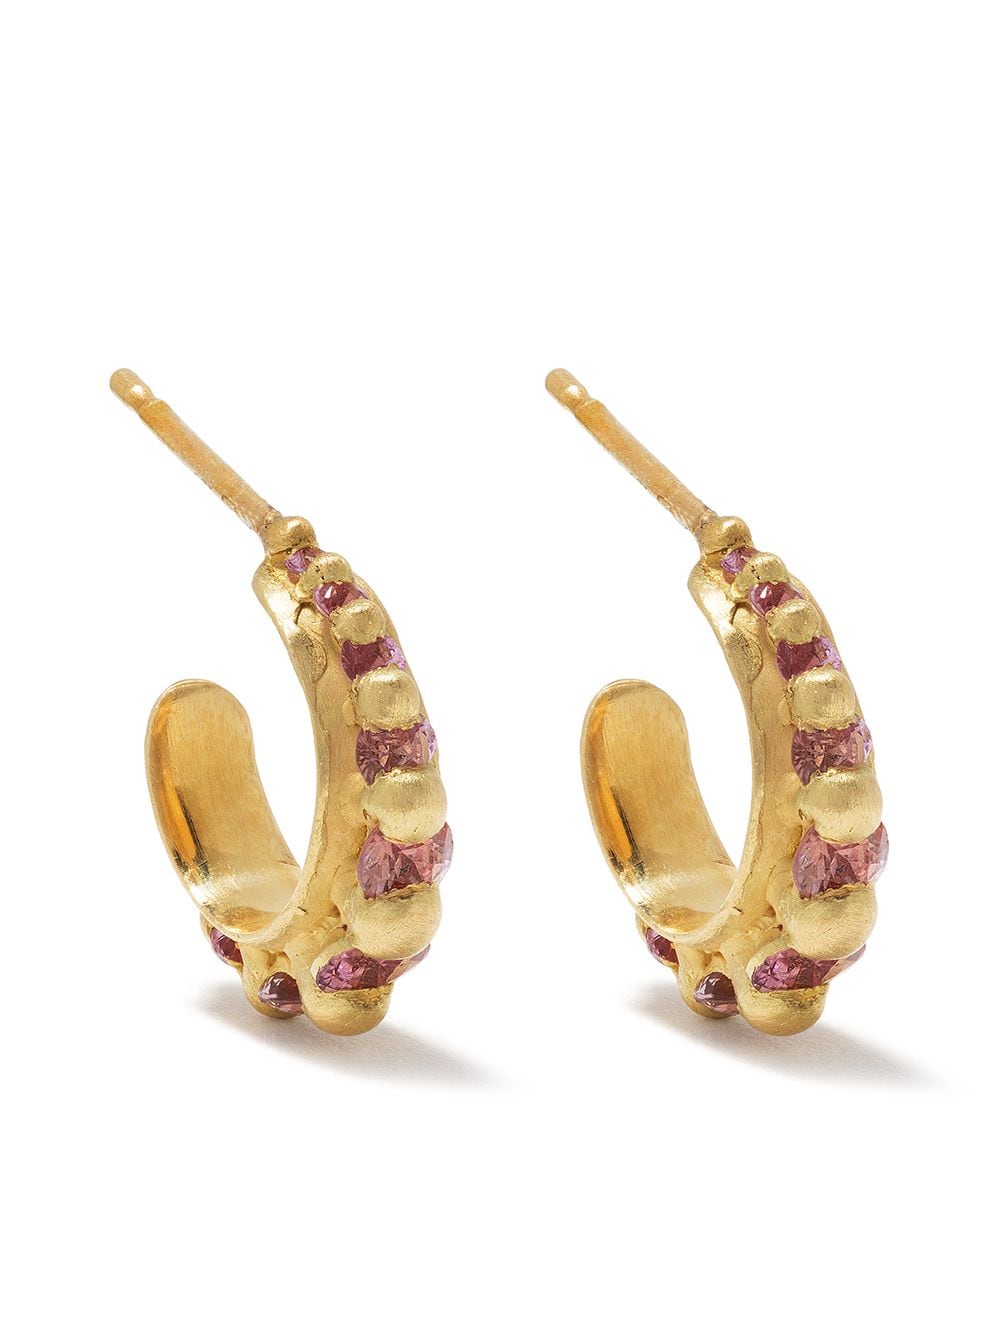 18kt yellow gold Nova sapphire earrings